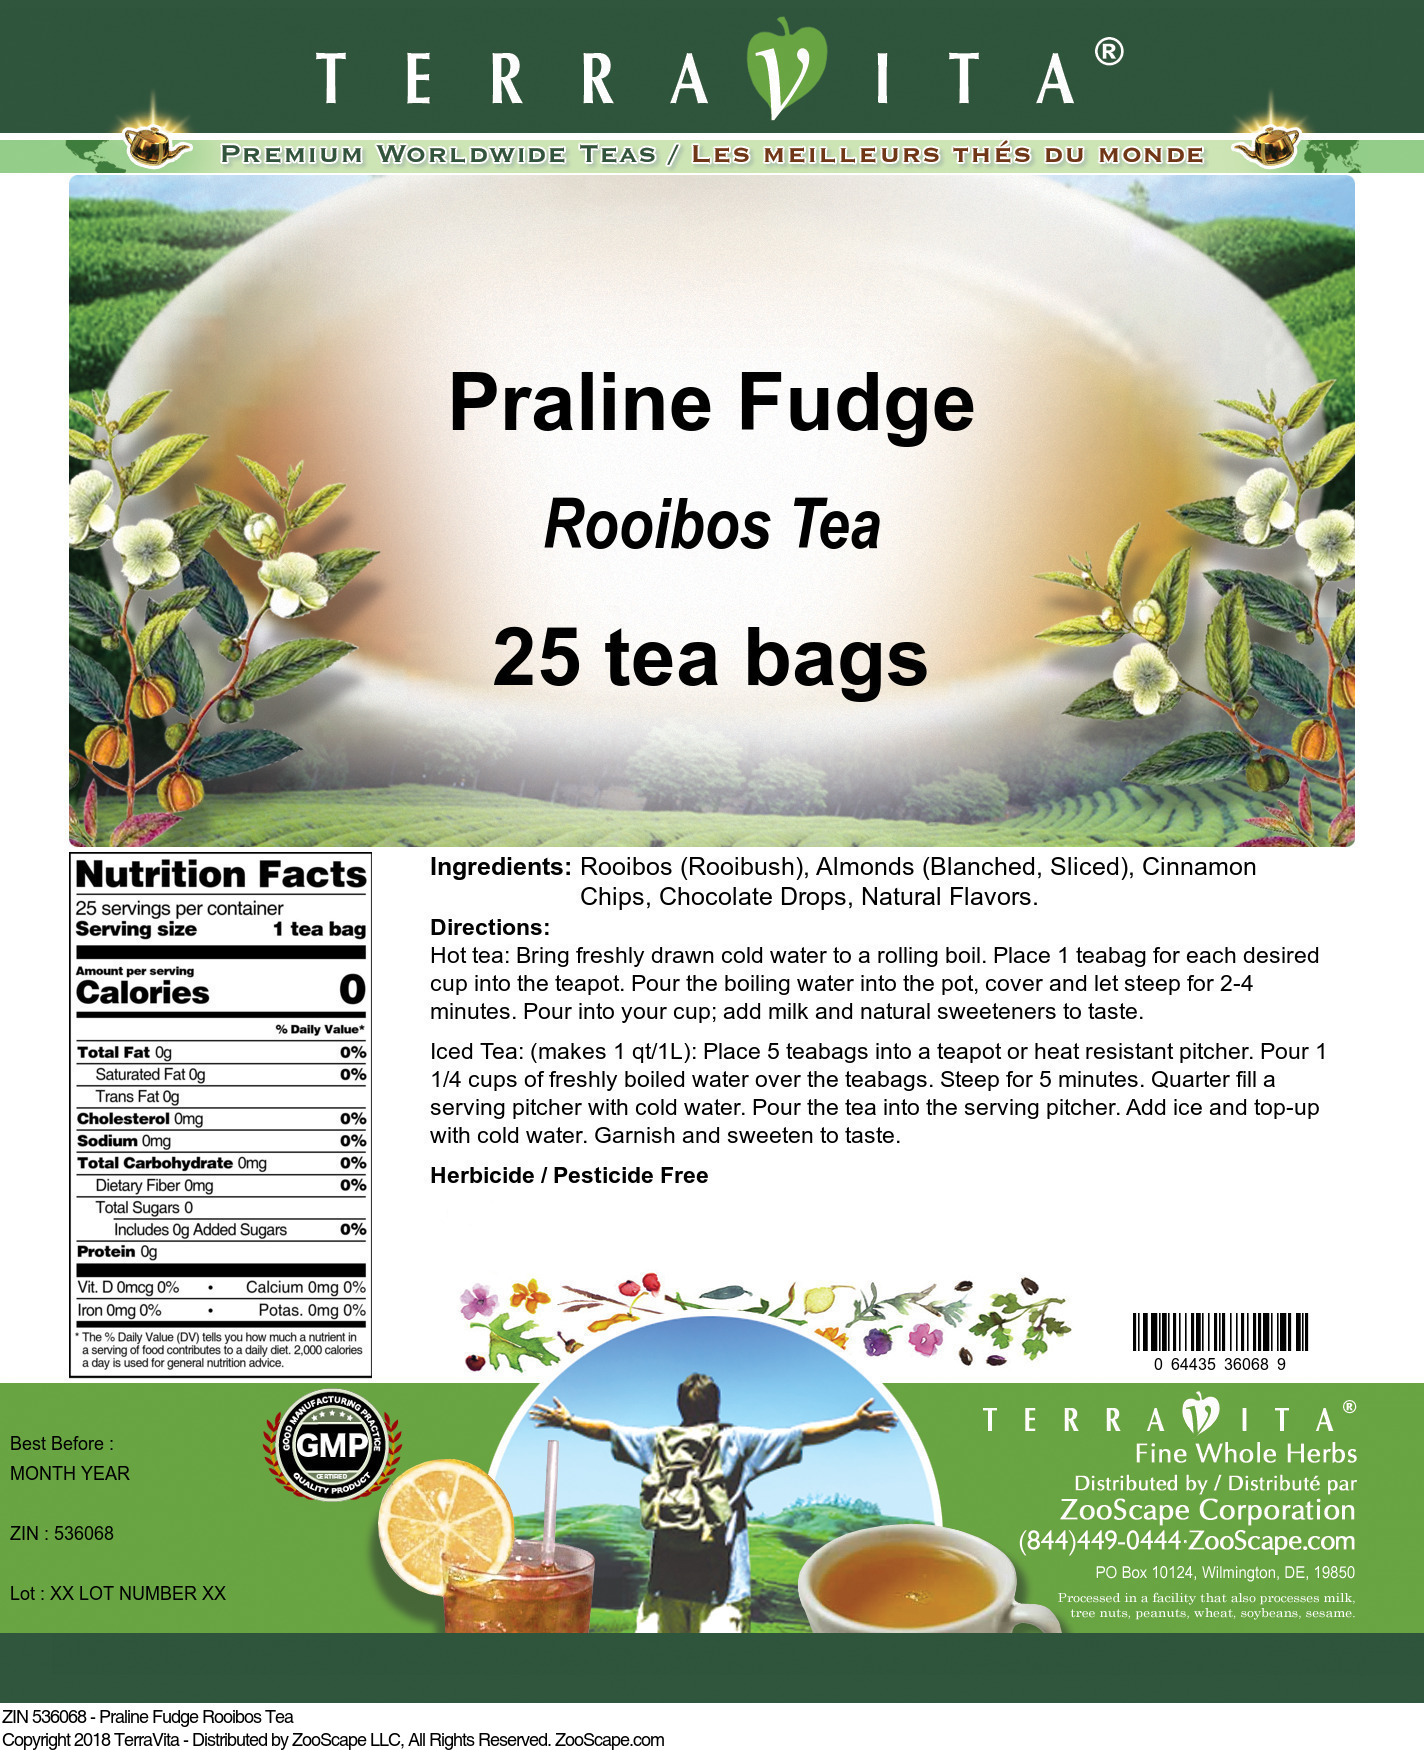 Praline Fudge Rooibos Tea - Label